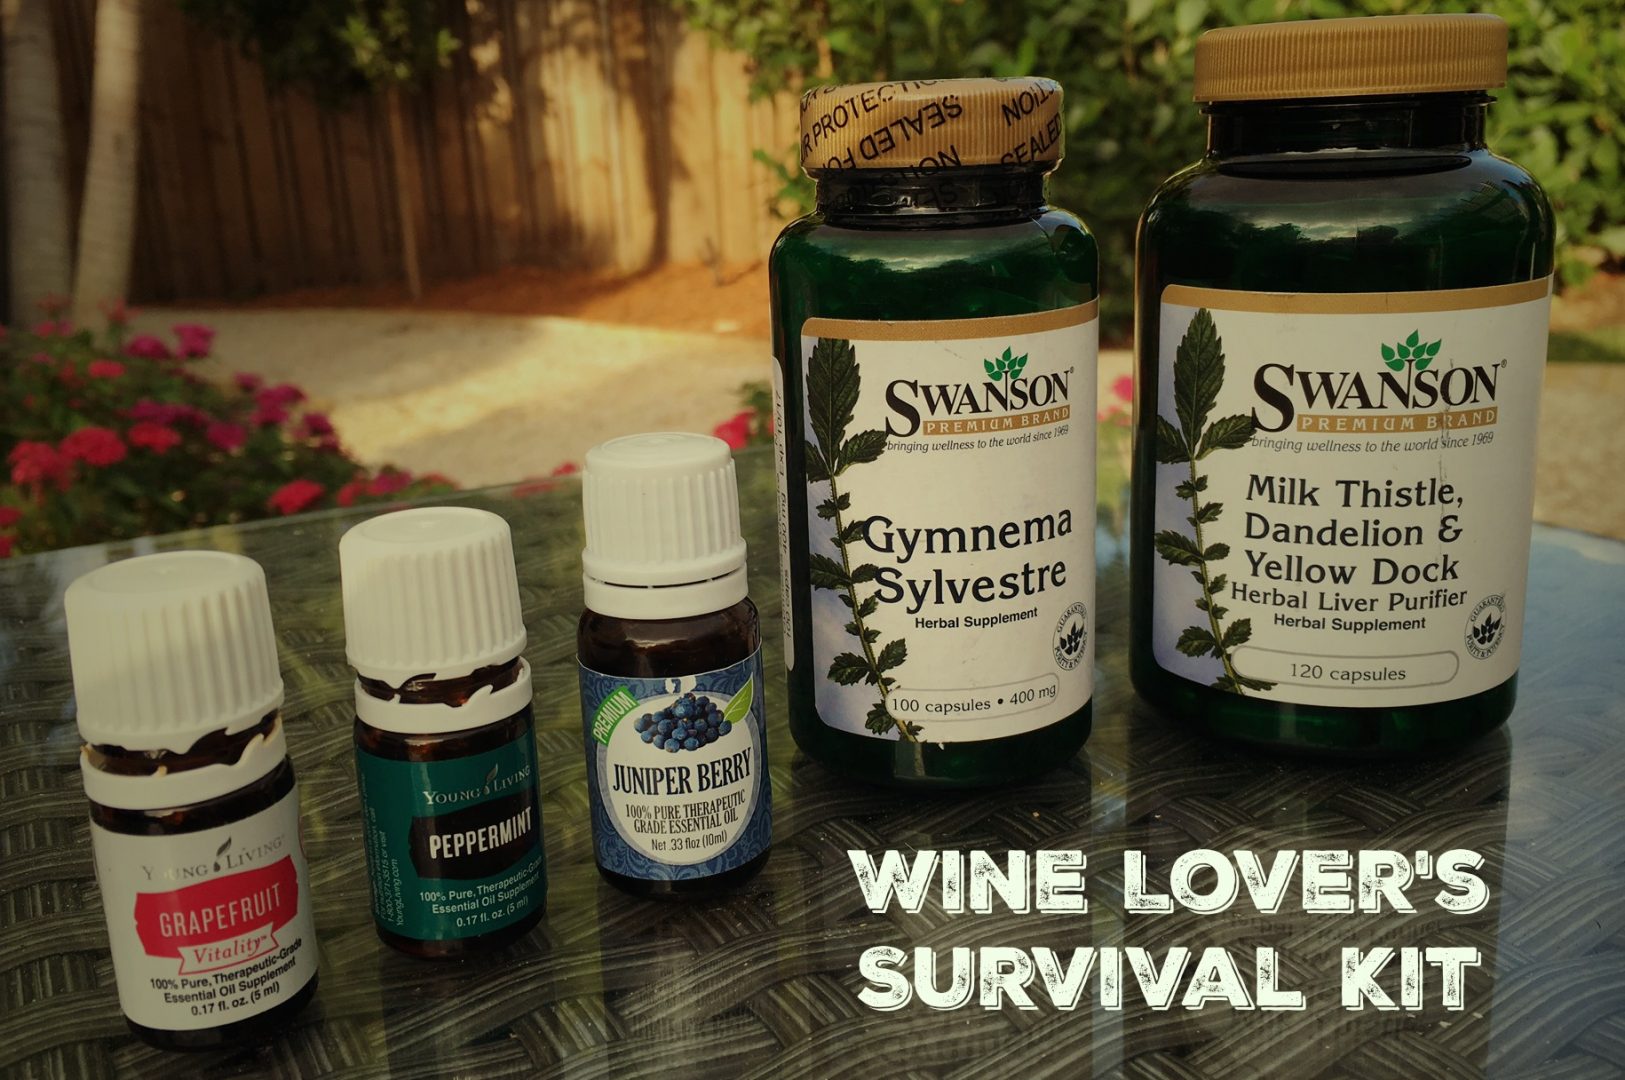 The Wine Lover’s Survival Kit